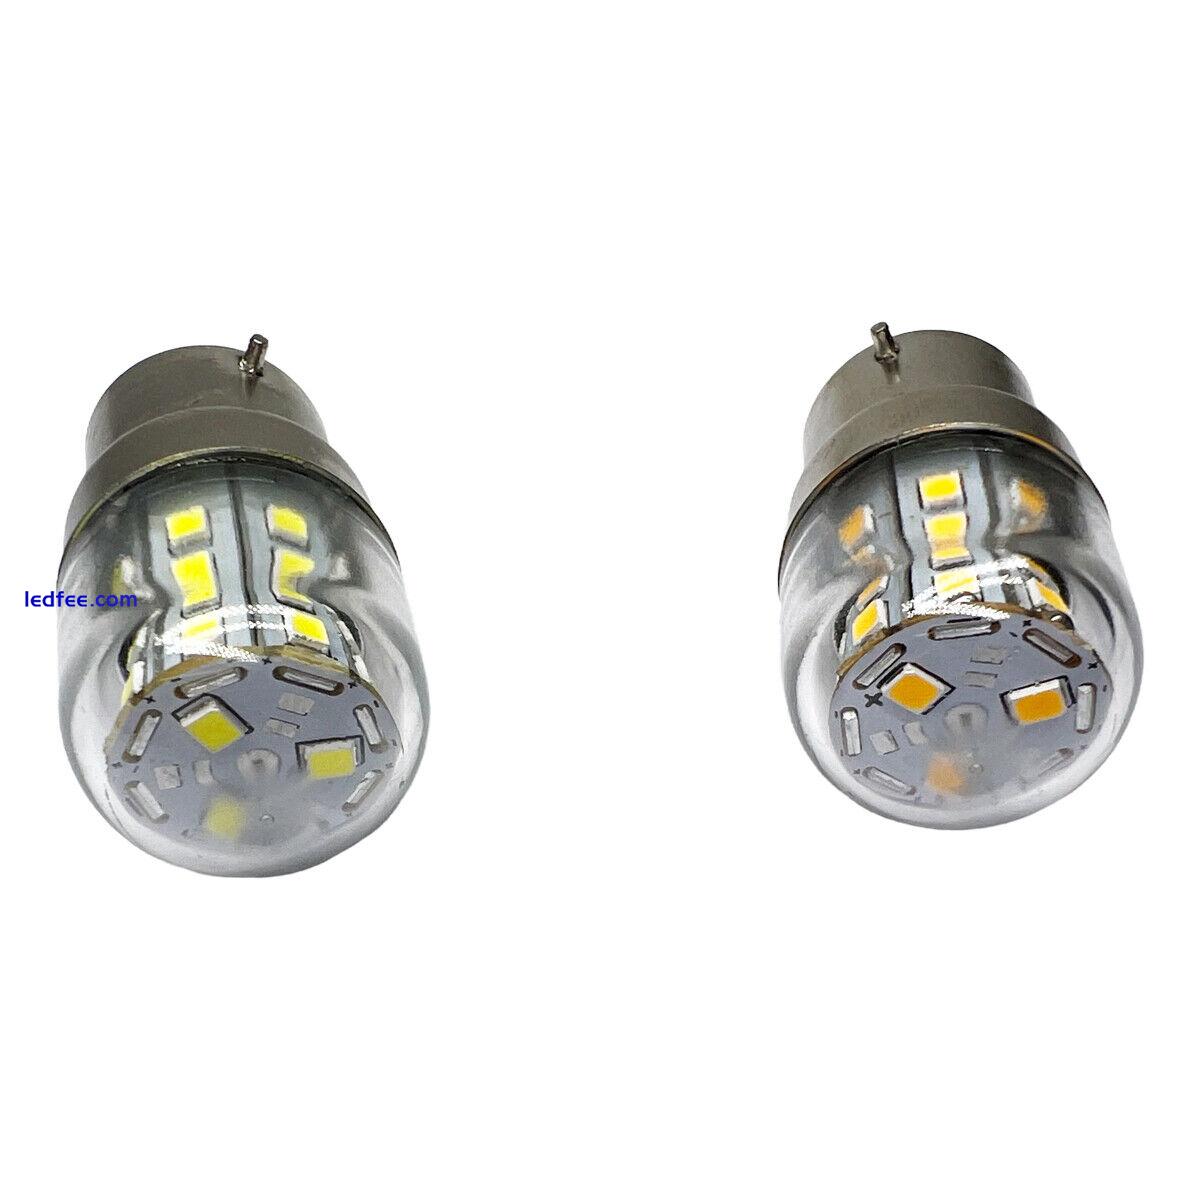 Mini B22 LED Corn Light Bulbs 4W T26 2835 SMD Lamp Refrigerator Kitchen Decor BC 3 